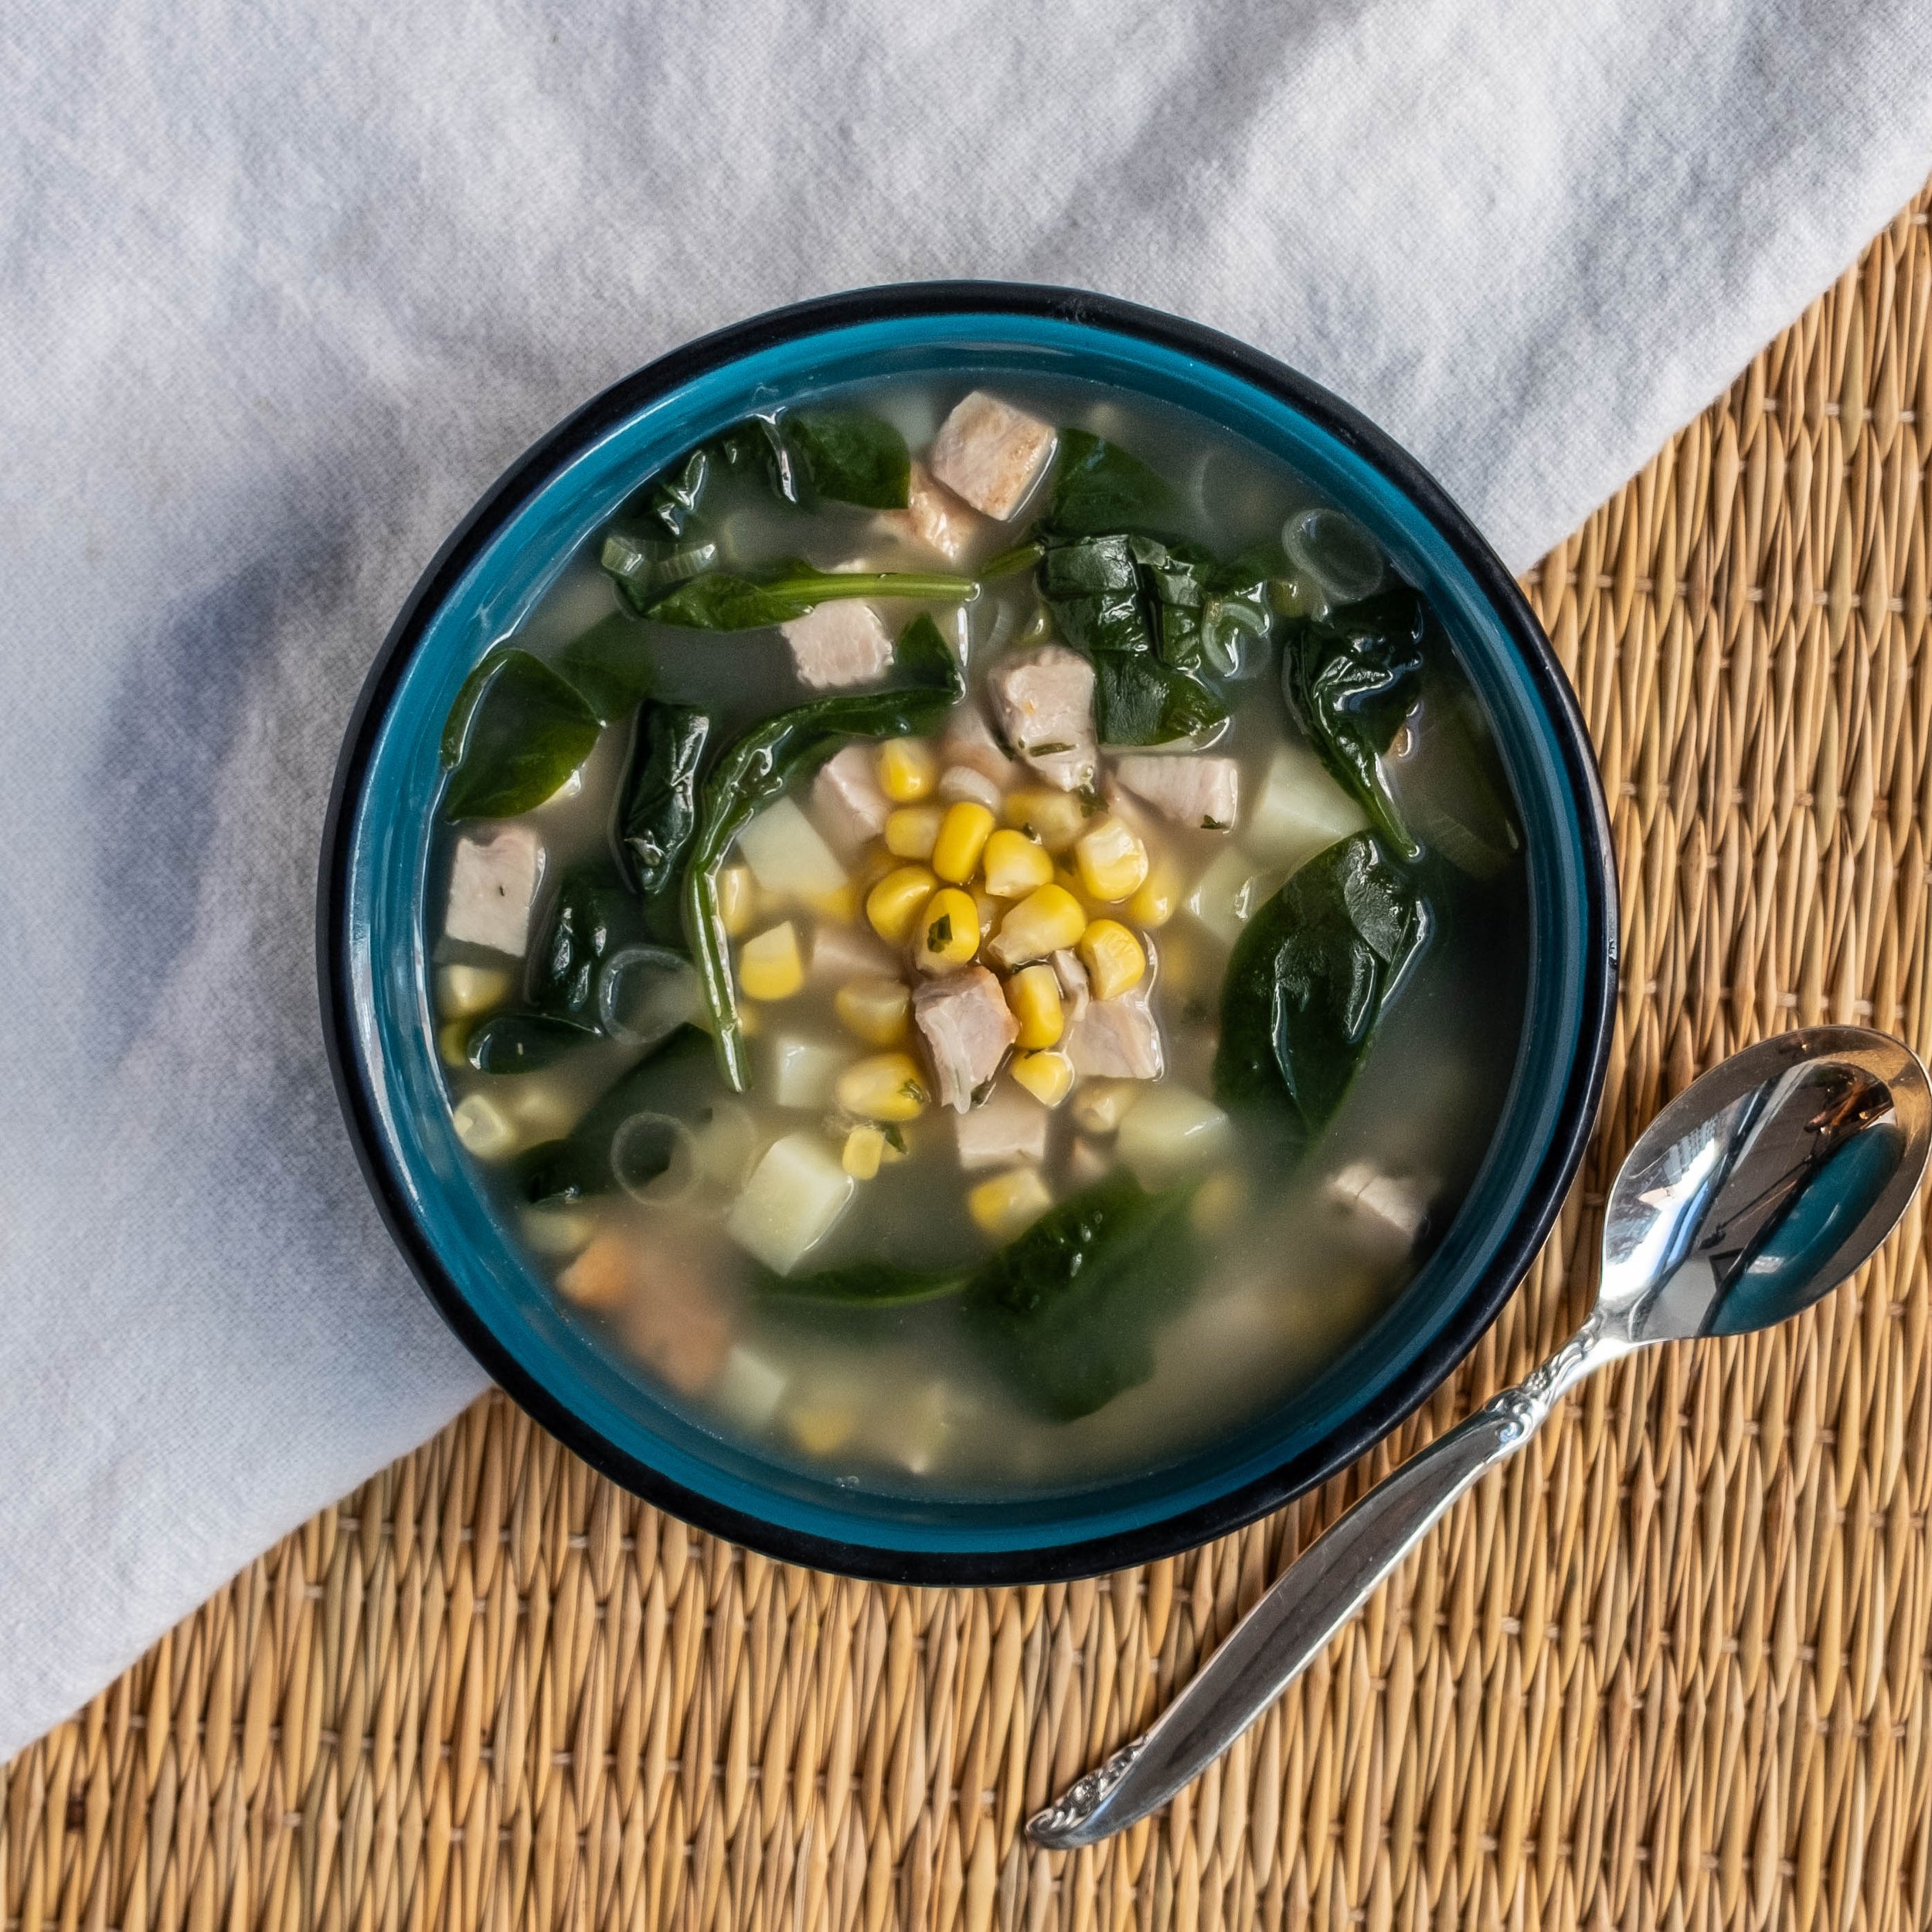 Aijaco Colombiano Soup